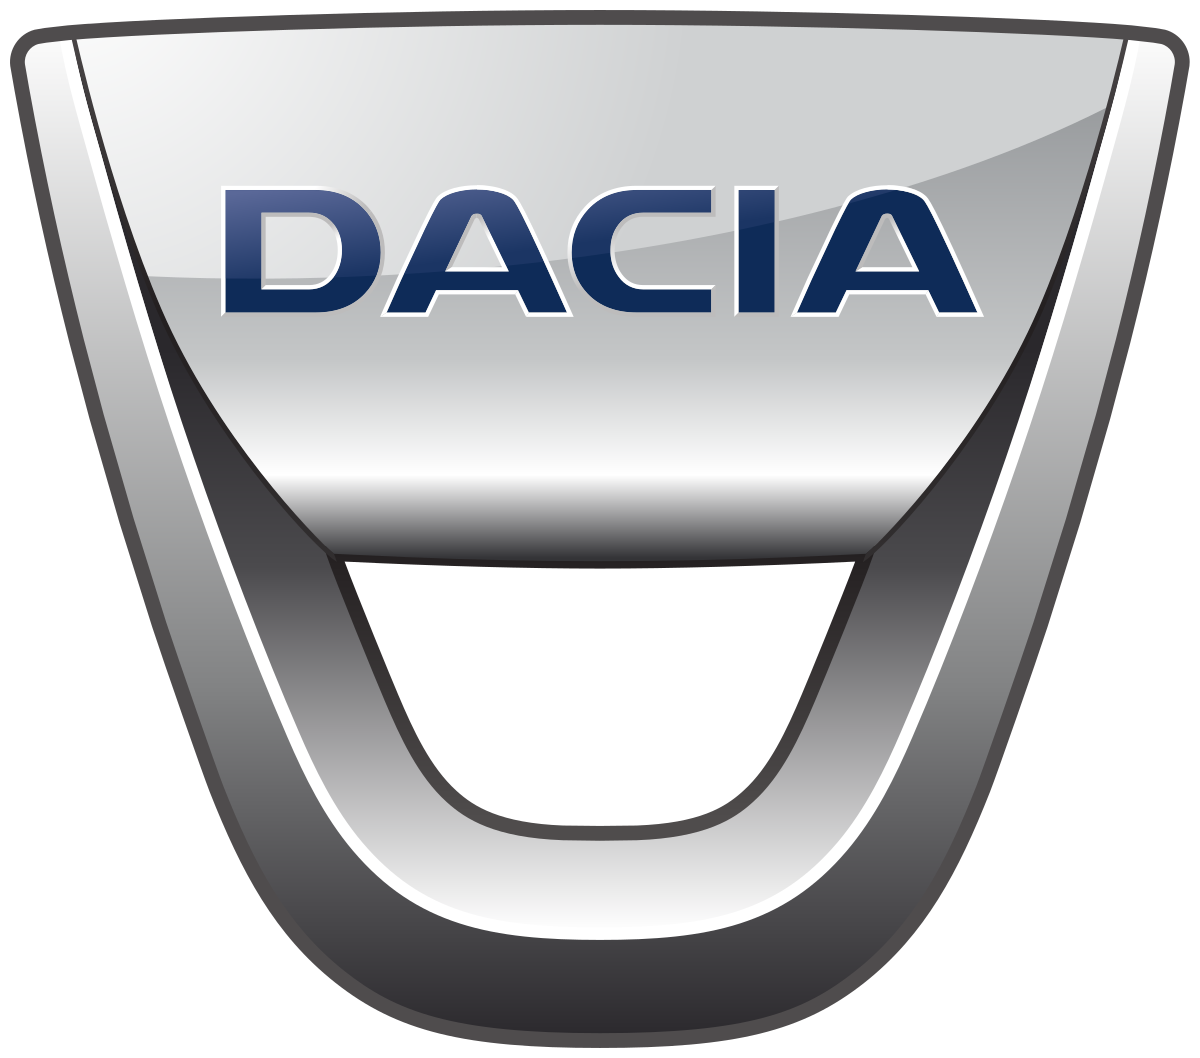 Dacia Araba Radyo Kodu